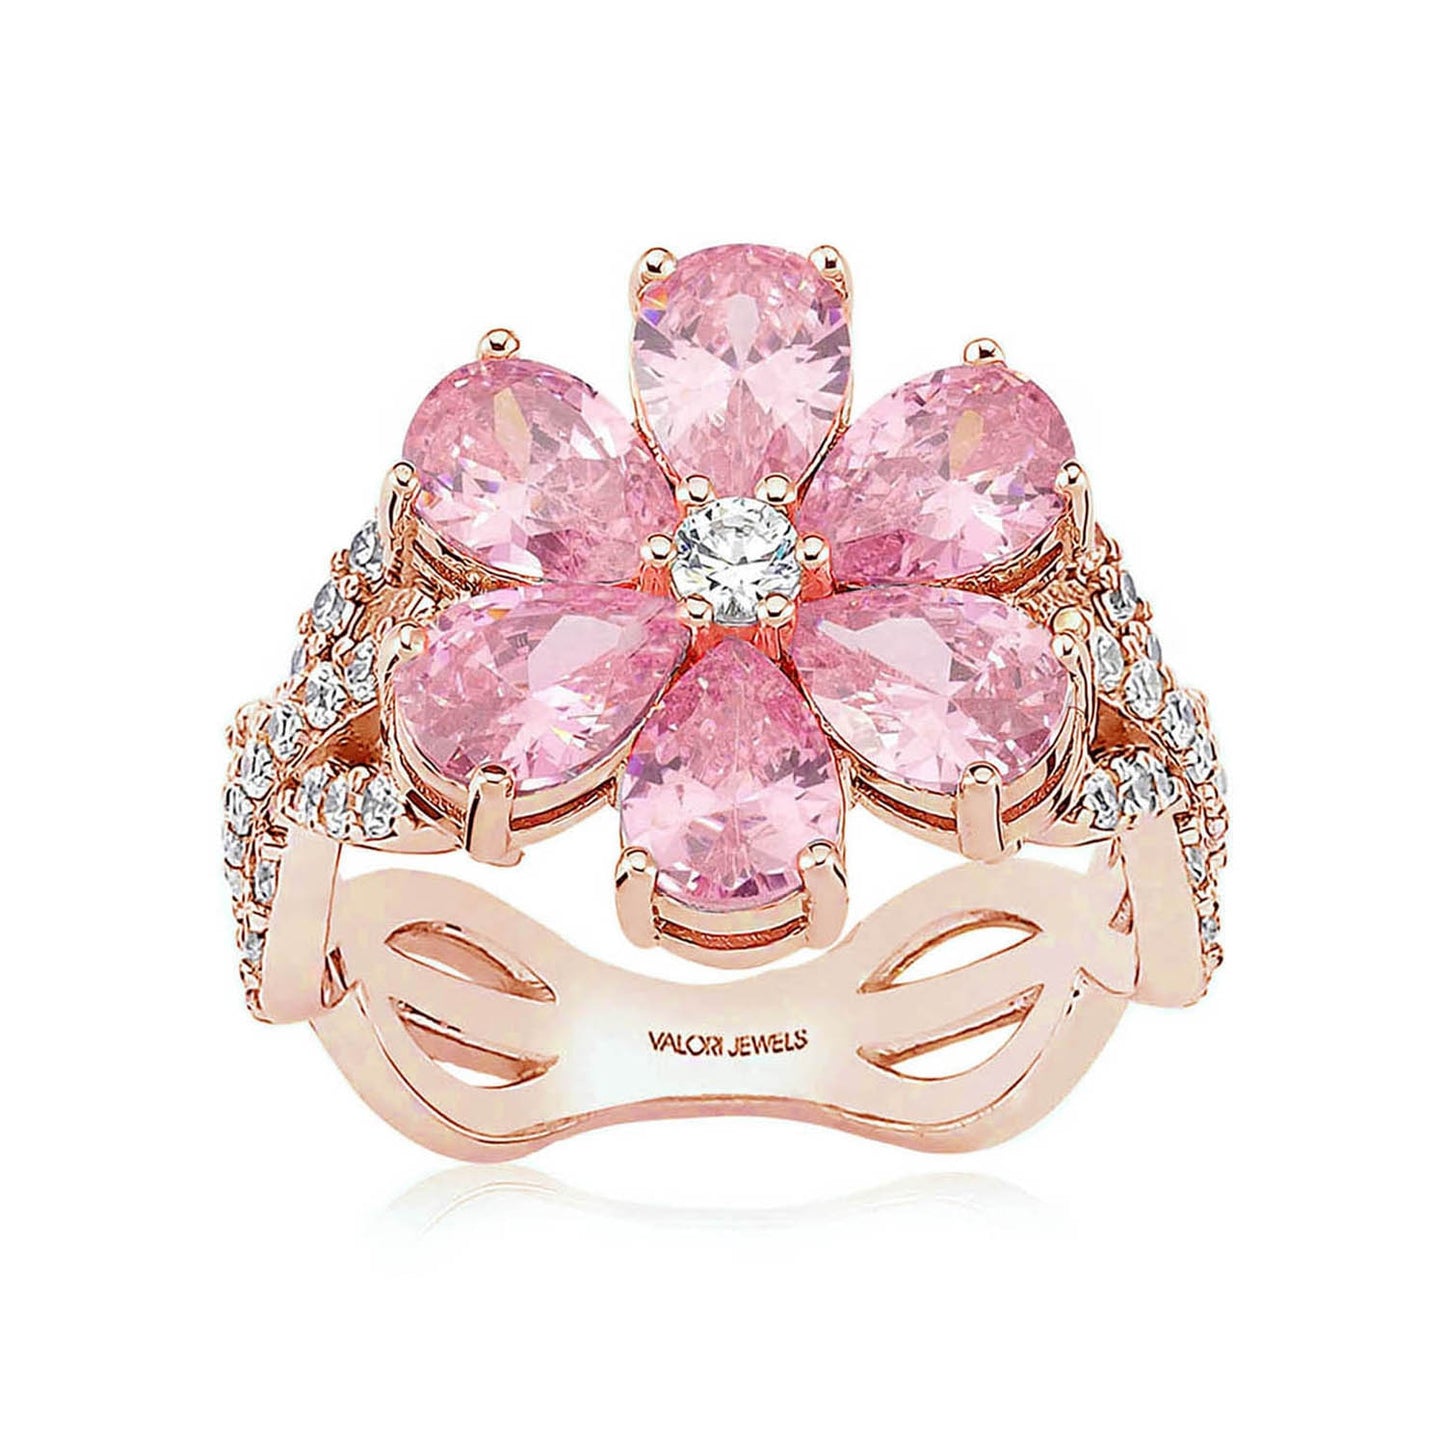 Valori Jewels Magnolia Flower Ring, 2 Ct Zircon Pink Pear Gemstone, Rhodium Plated, 925 Silver, Fine Jewelry - Niki Ice Jewelry 